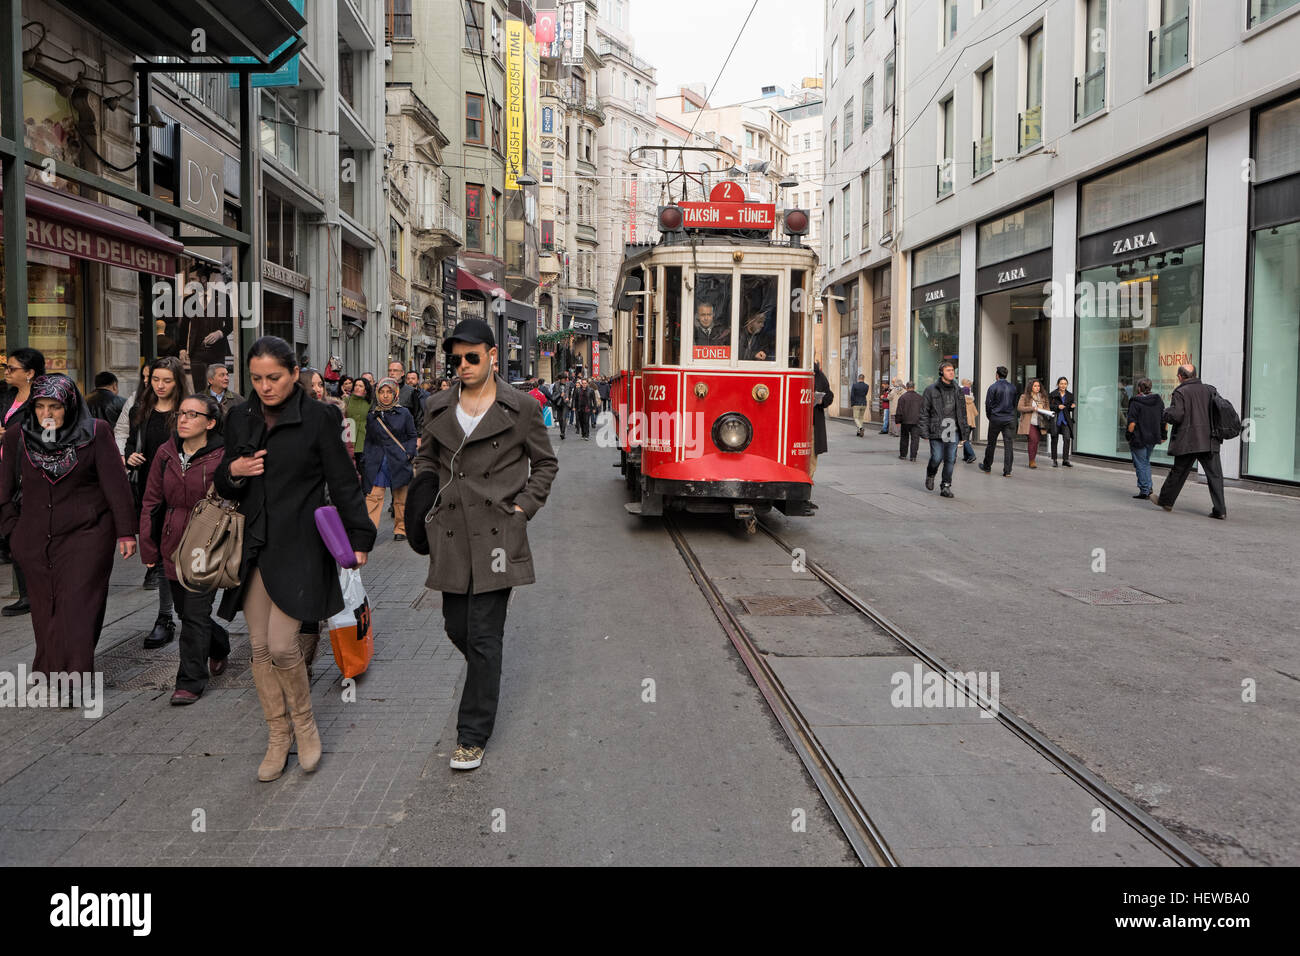 Tram Nostalgico in Istiklal Street ride Tra Taksim e Tunnel square a Istanbul Foto Stock